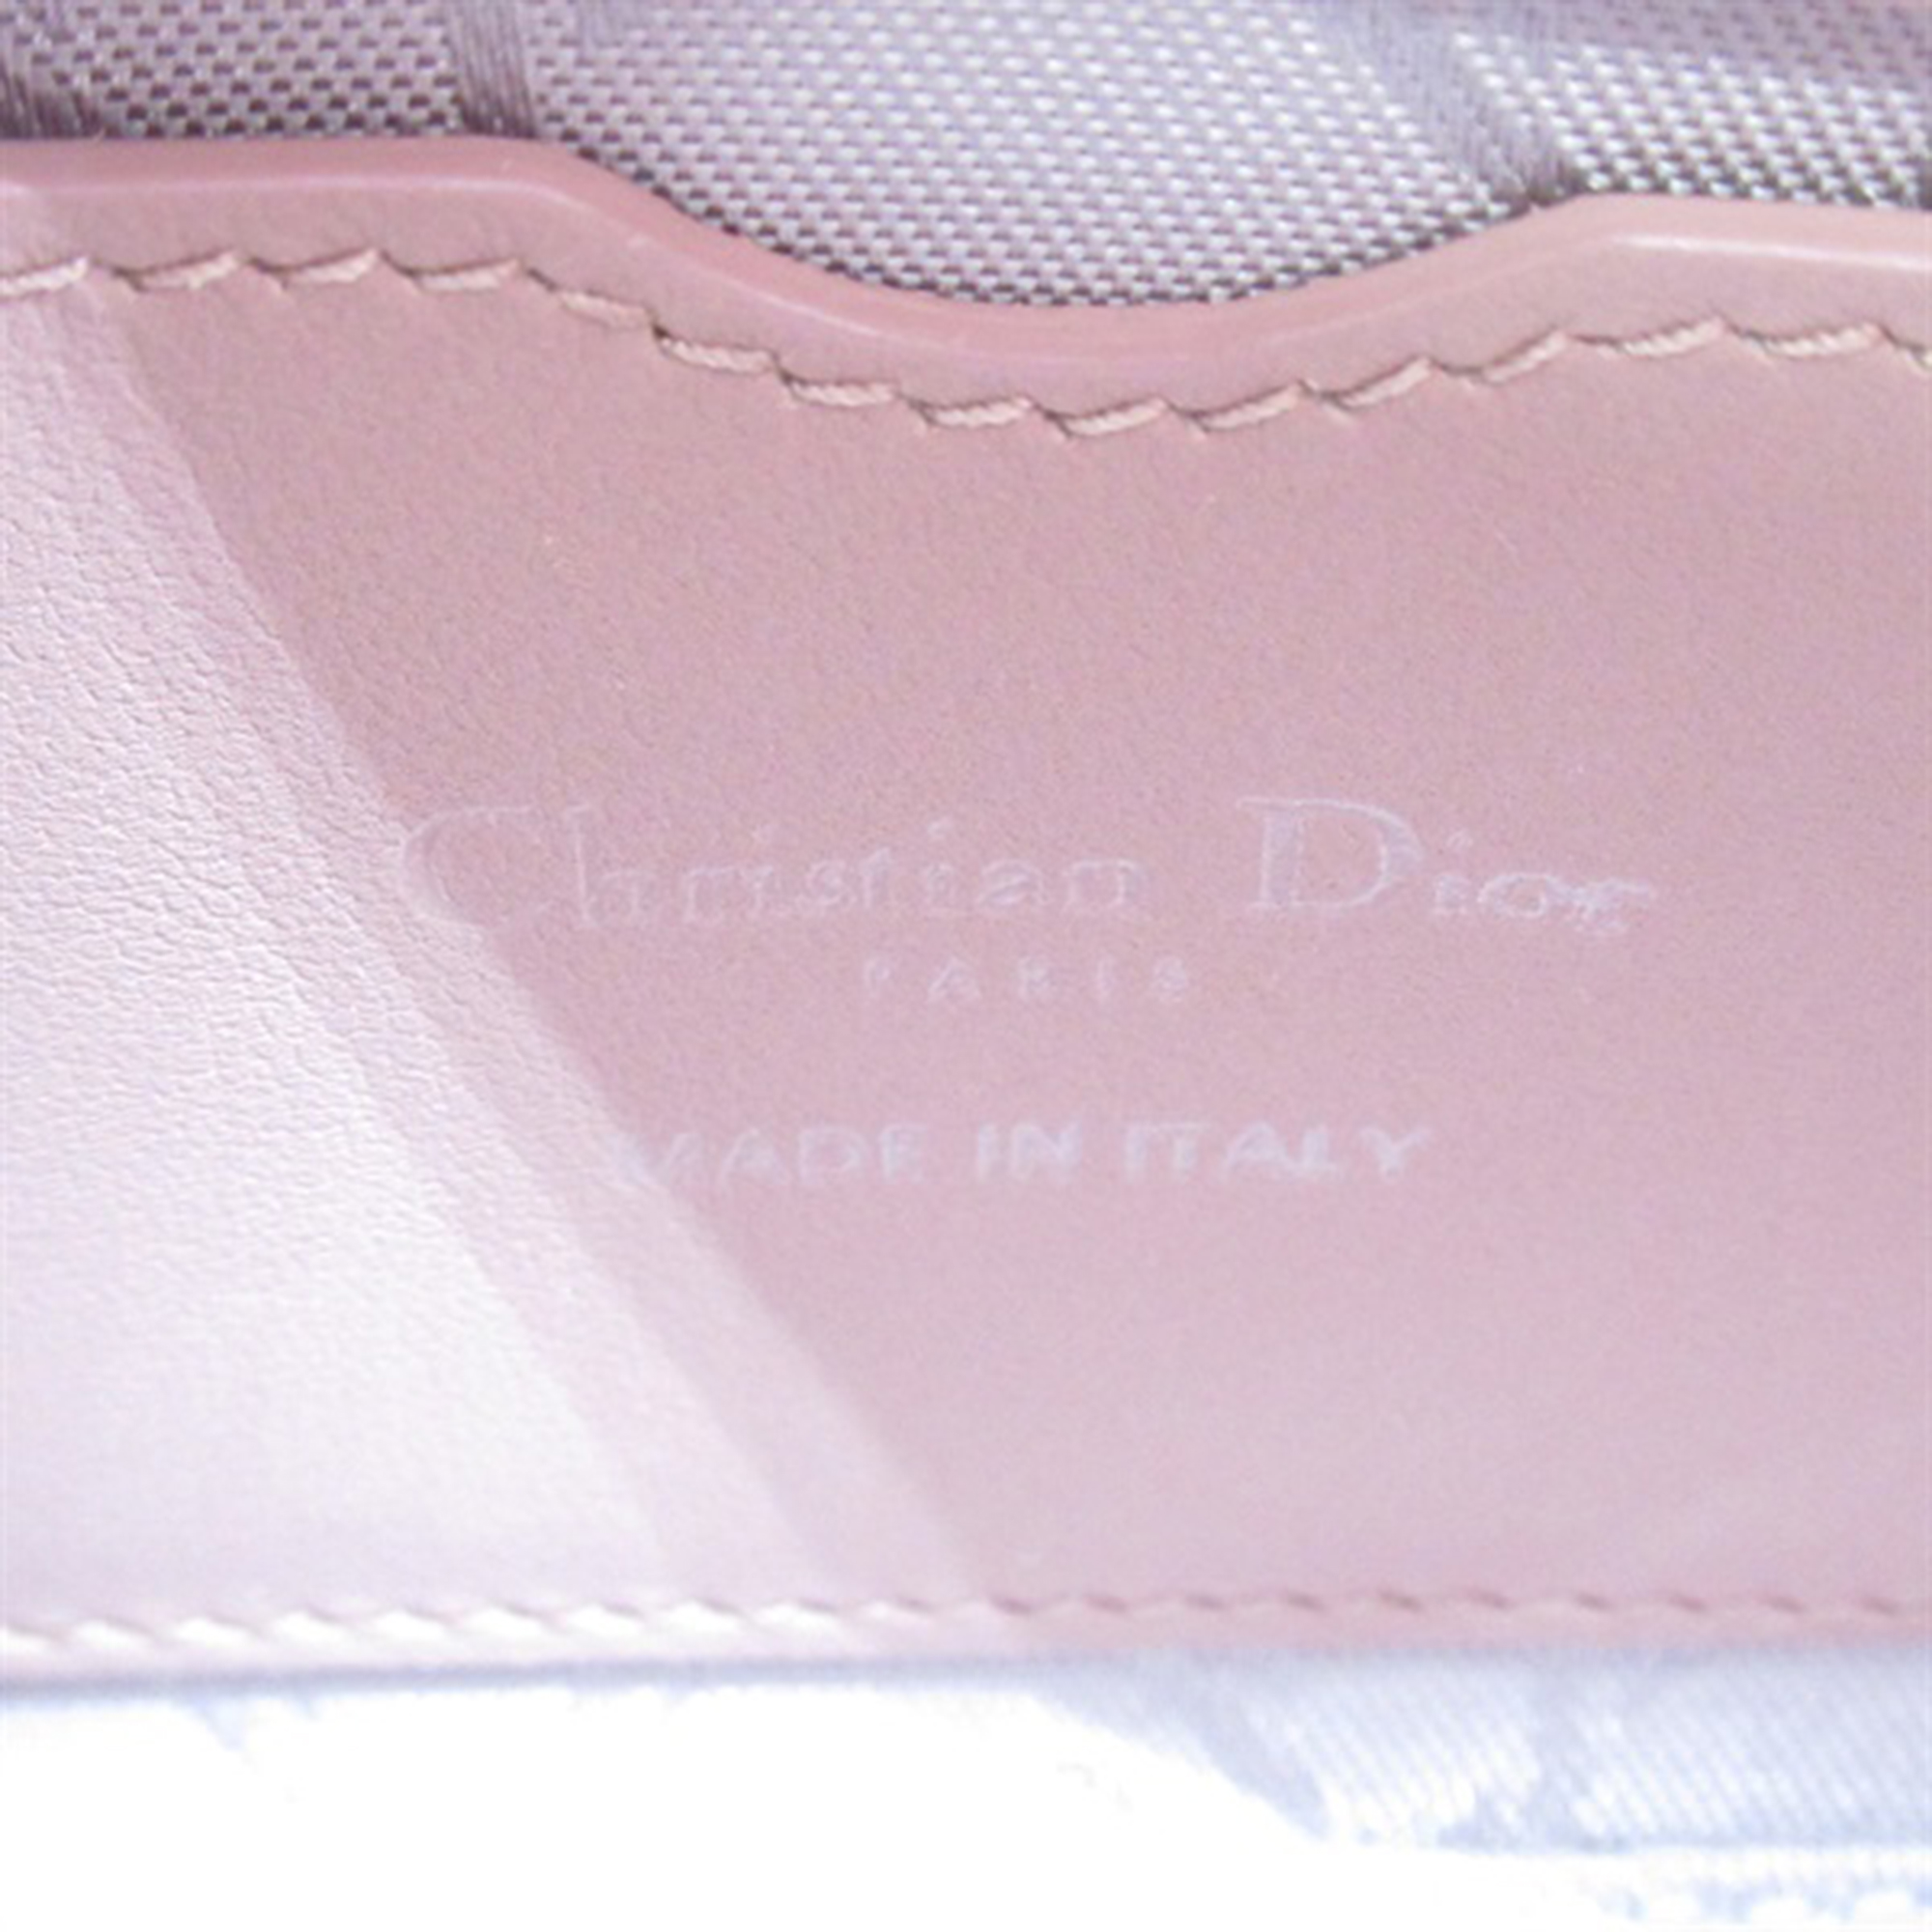 Dior Brown Mini Cannage Leather Lady Dior Bag